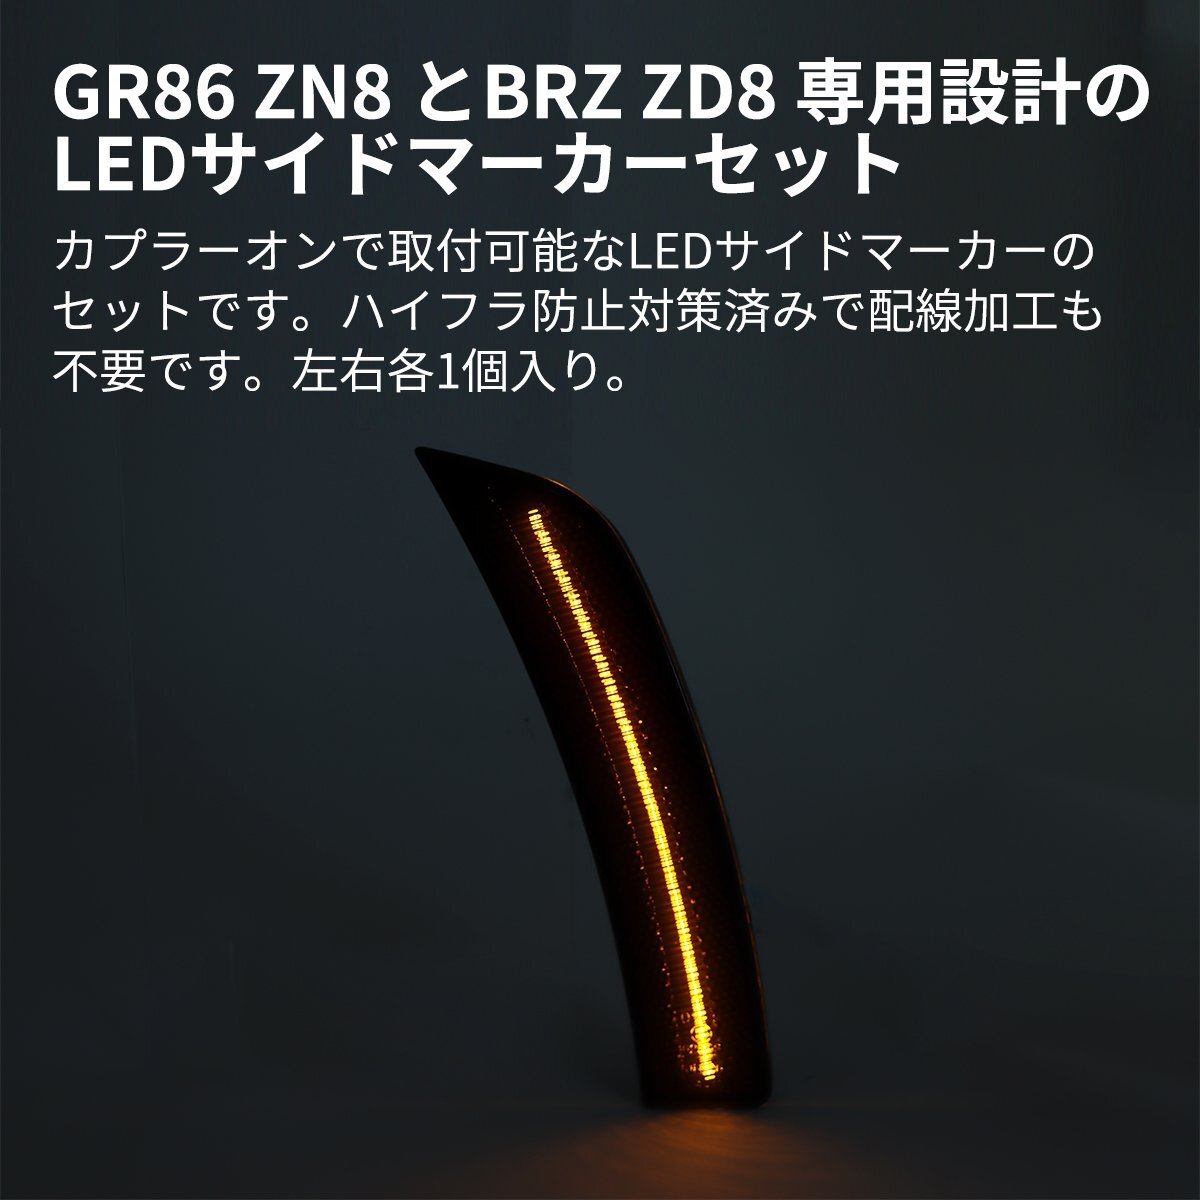 GR86 ZN8 BRZ ZD8 LED サイドマーカー スモークレンズ アンバー カプラーオン FZ580_画像2